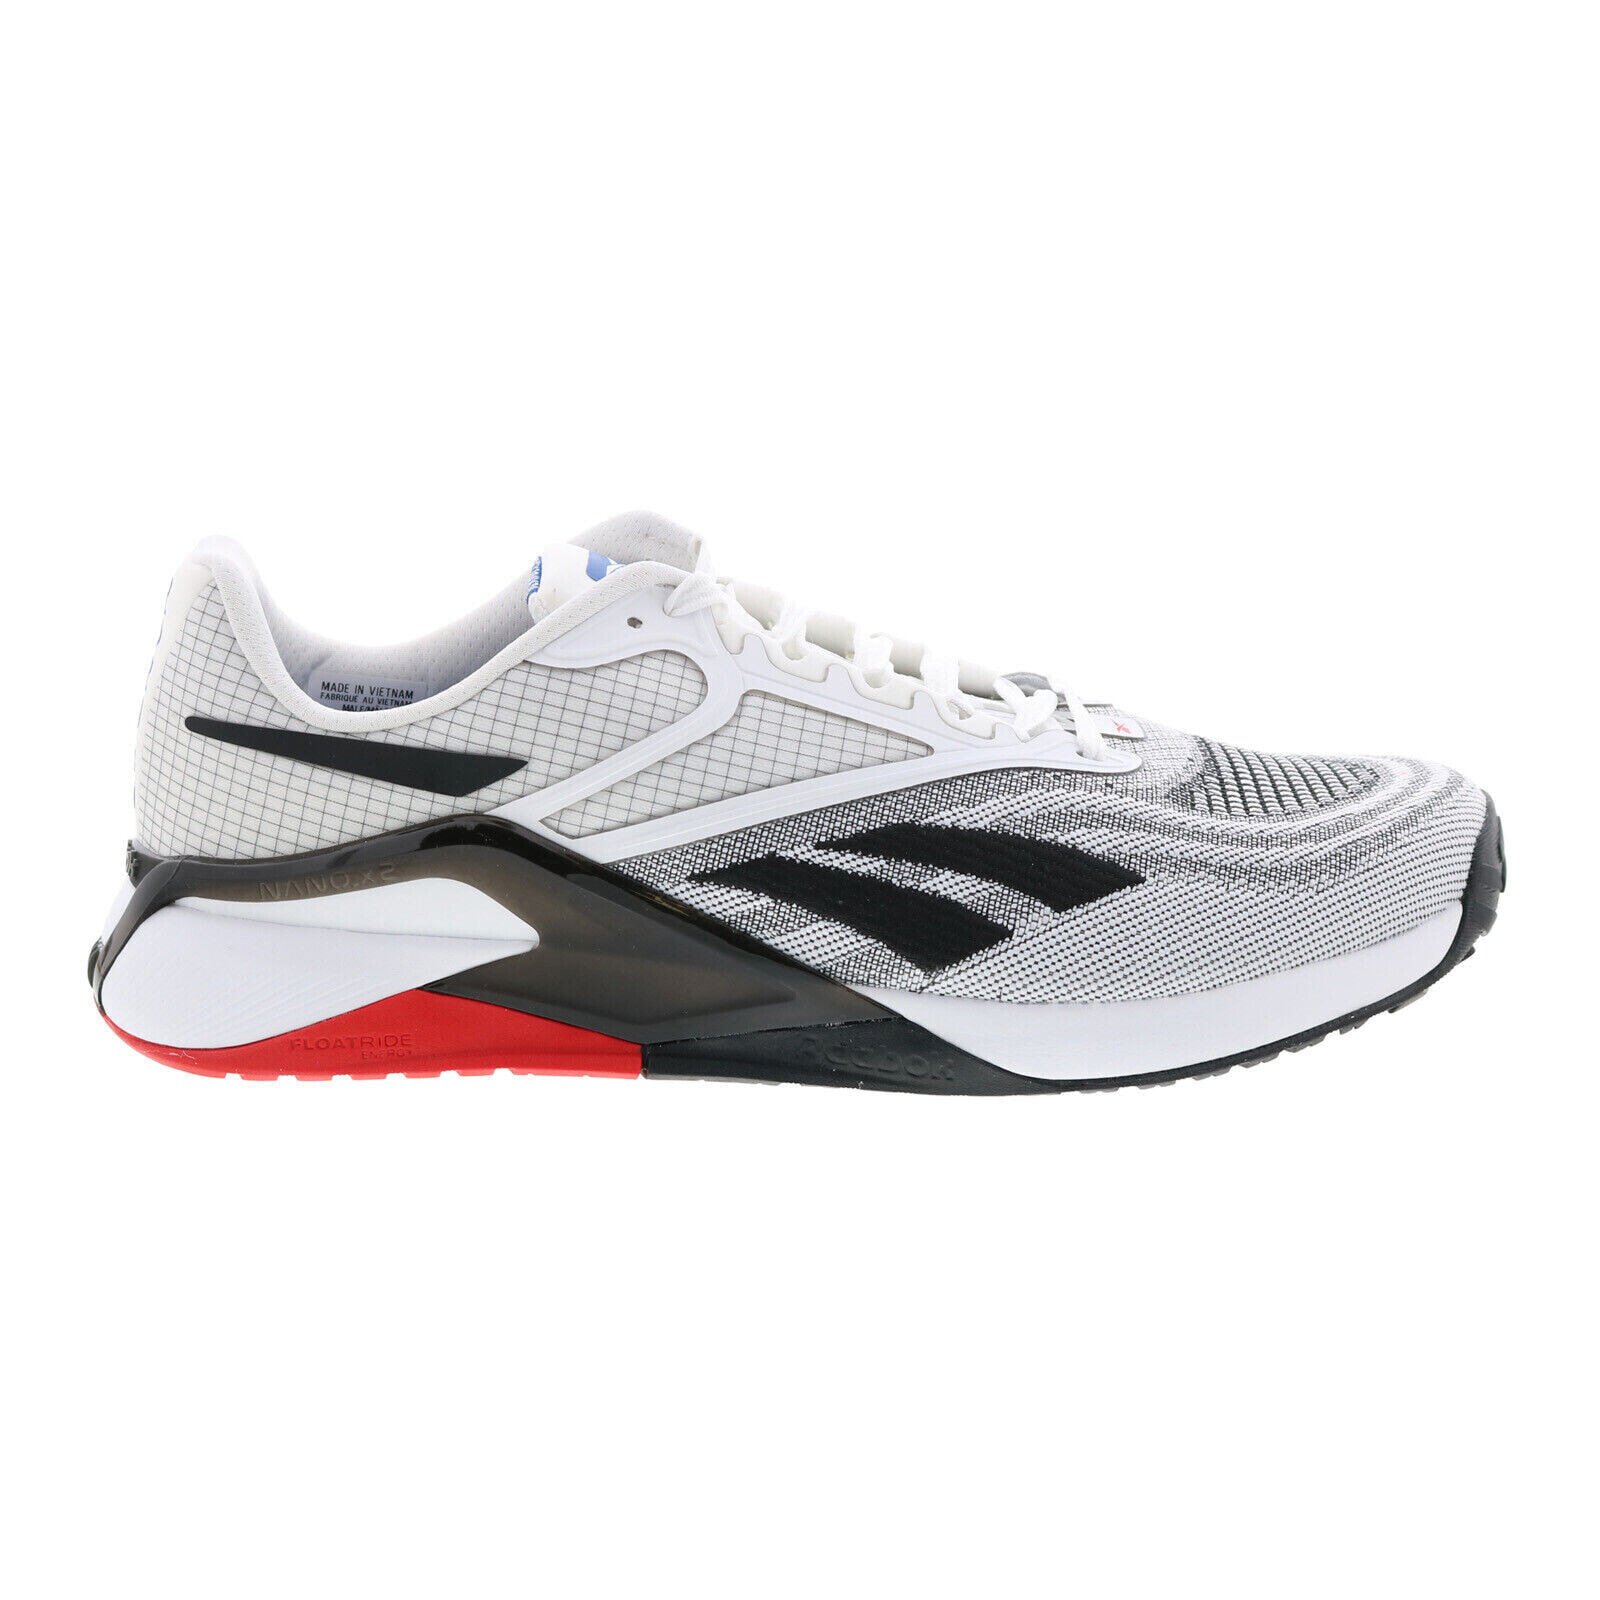 Reebok Nano X2 GX9909 Mens White Canvas Lace Up Athletic Cross Training Shoes